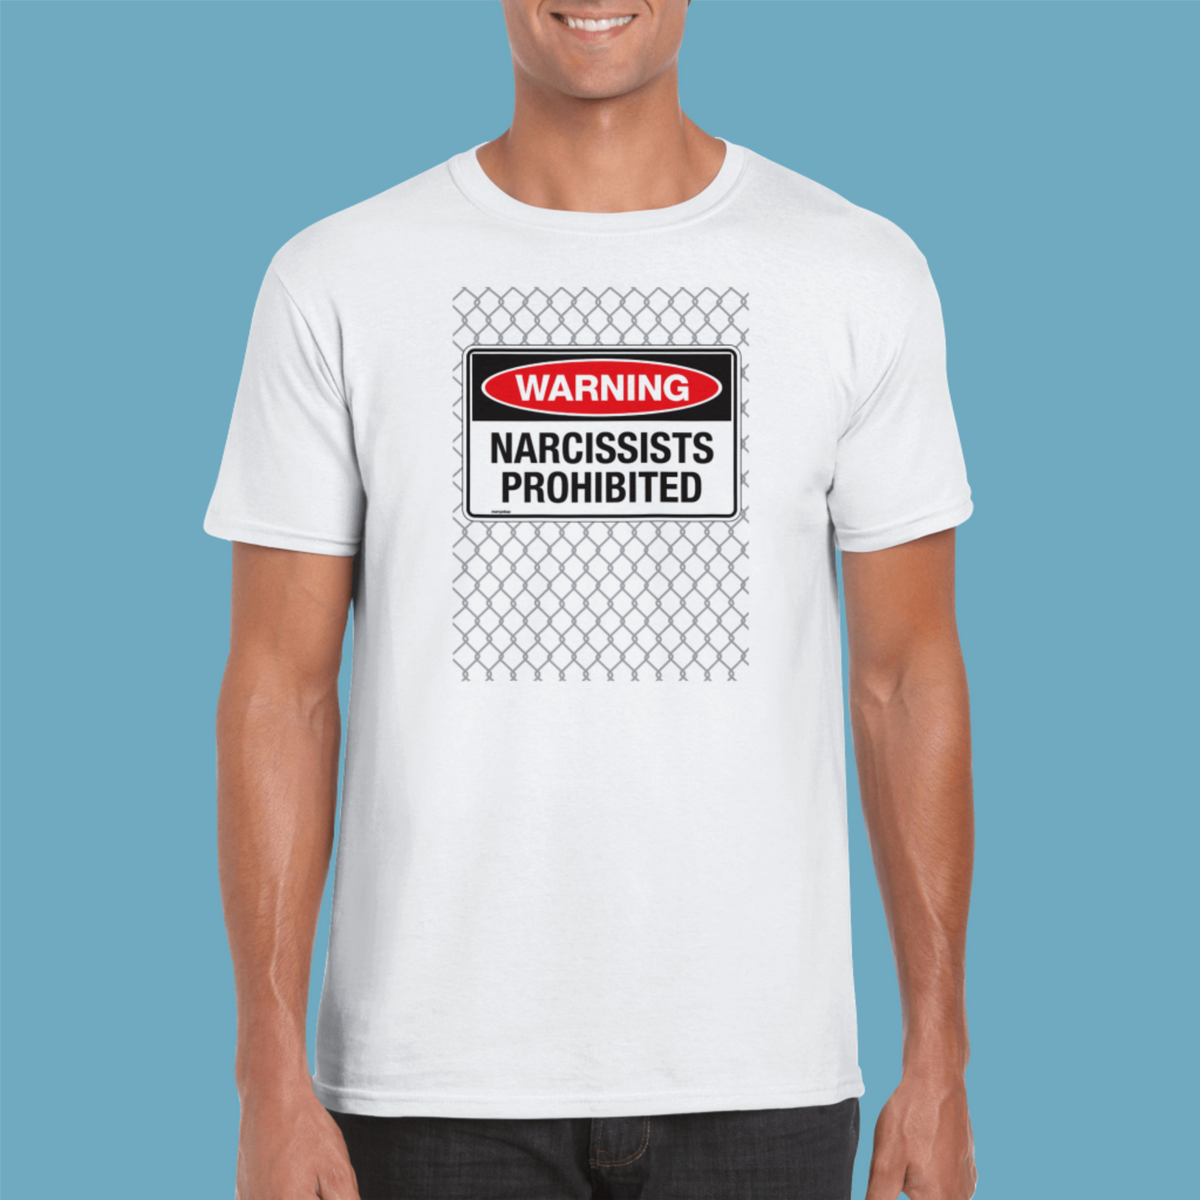 Mens Narcissists Prohibited white t shirt - MangoBap